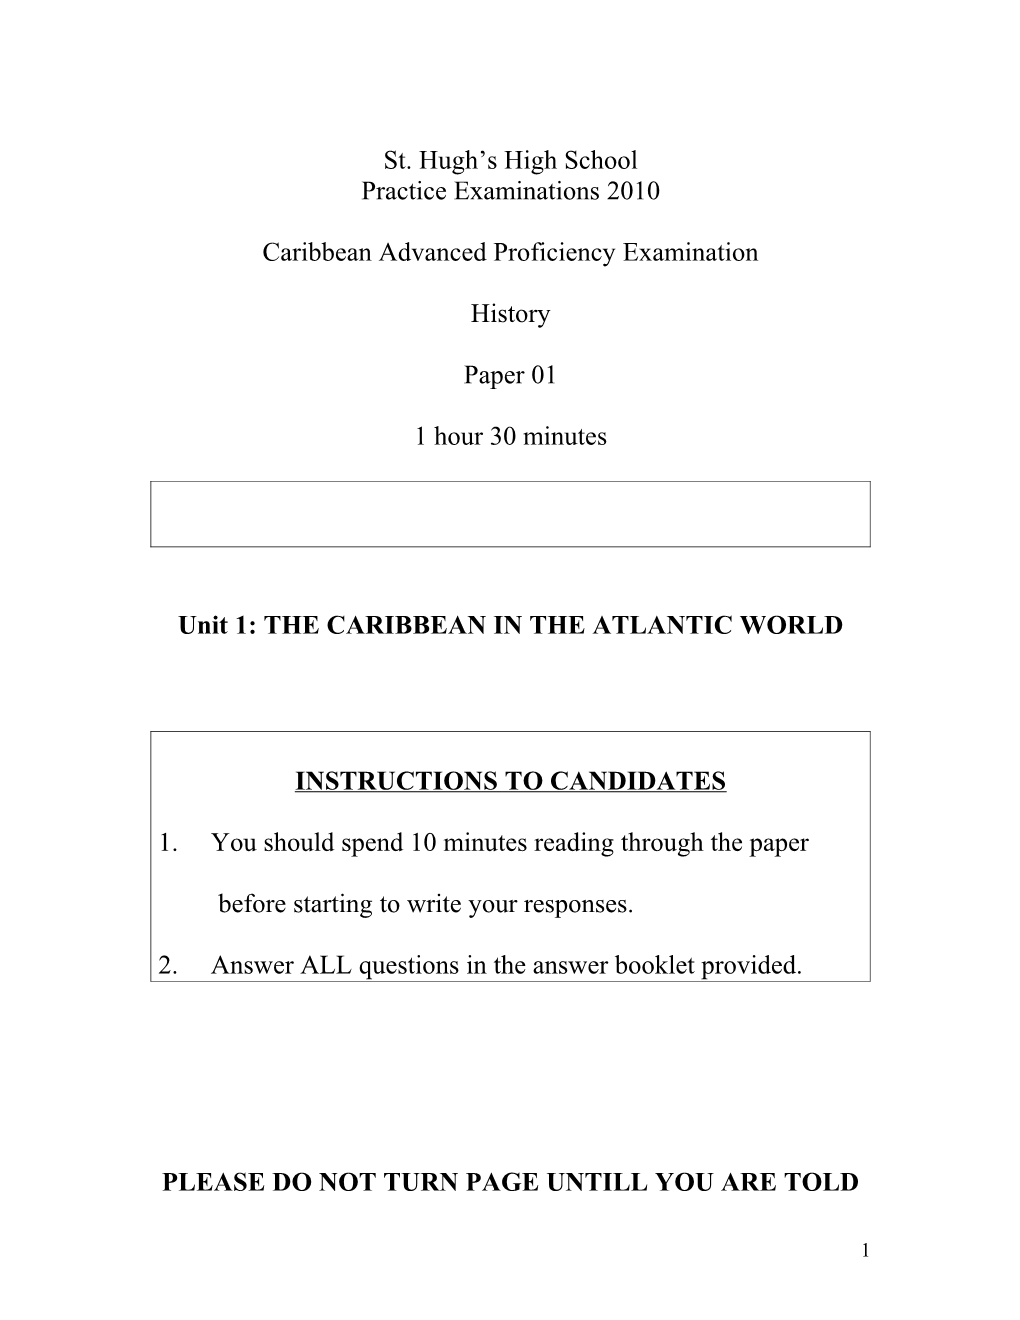 Unit 1: the CARIBBEAN in the ATLANTIC WORLD